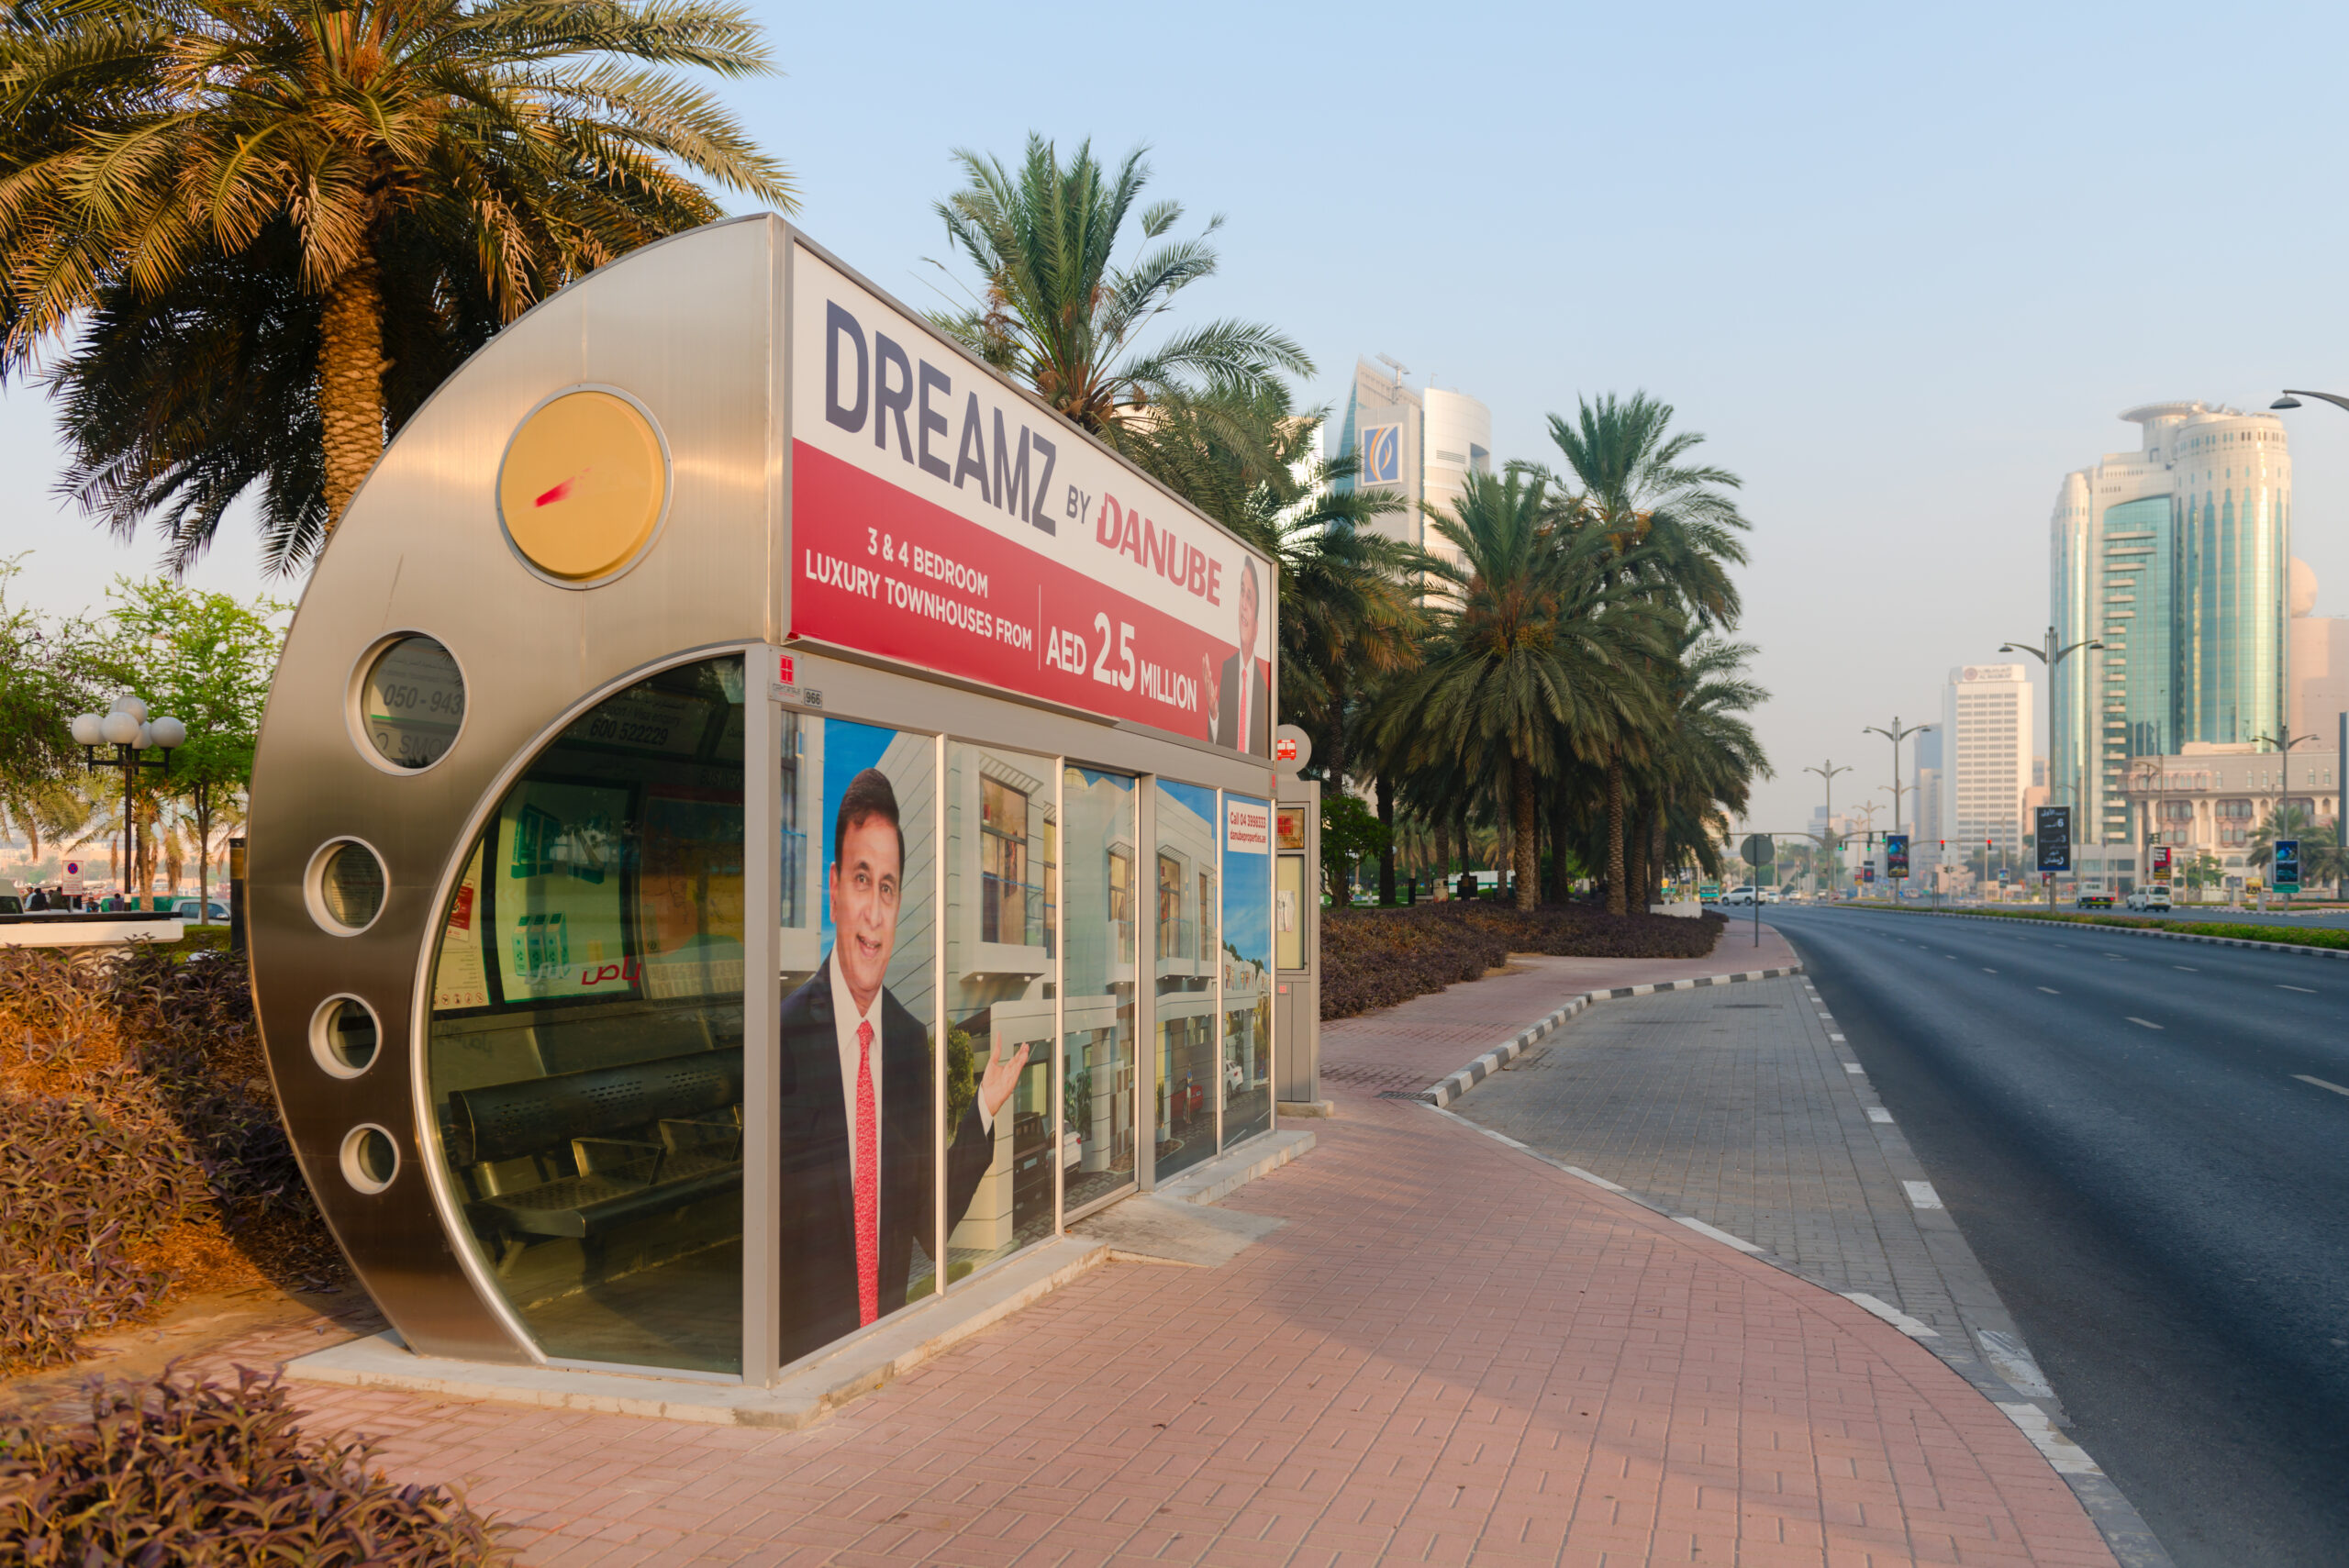 Dubai Bus - Typical bus stop in Dubai